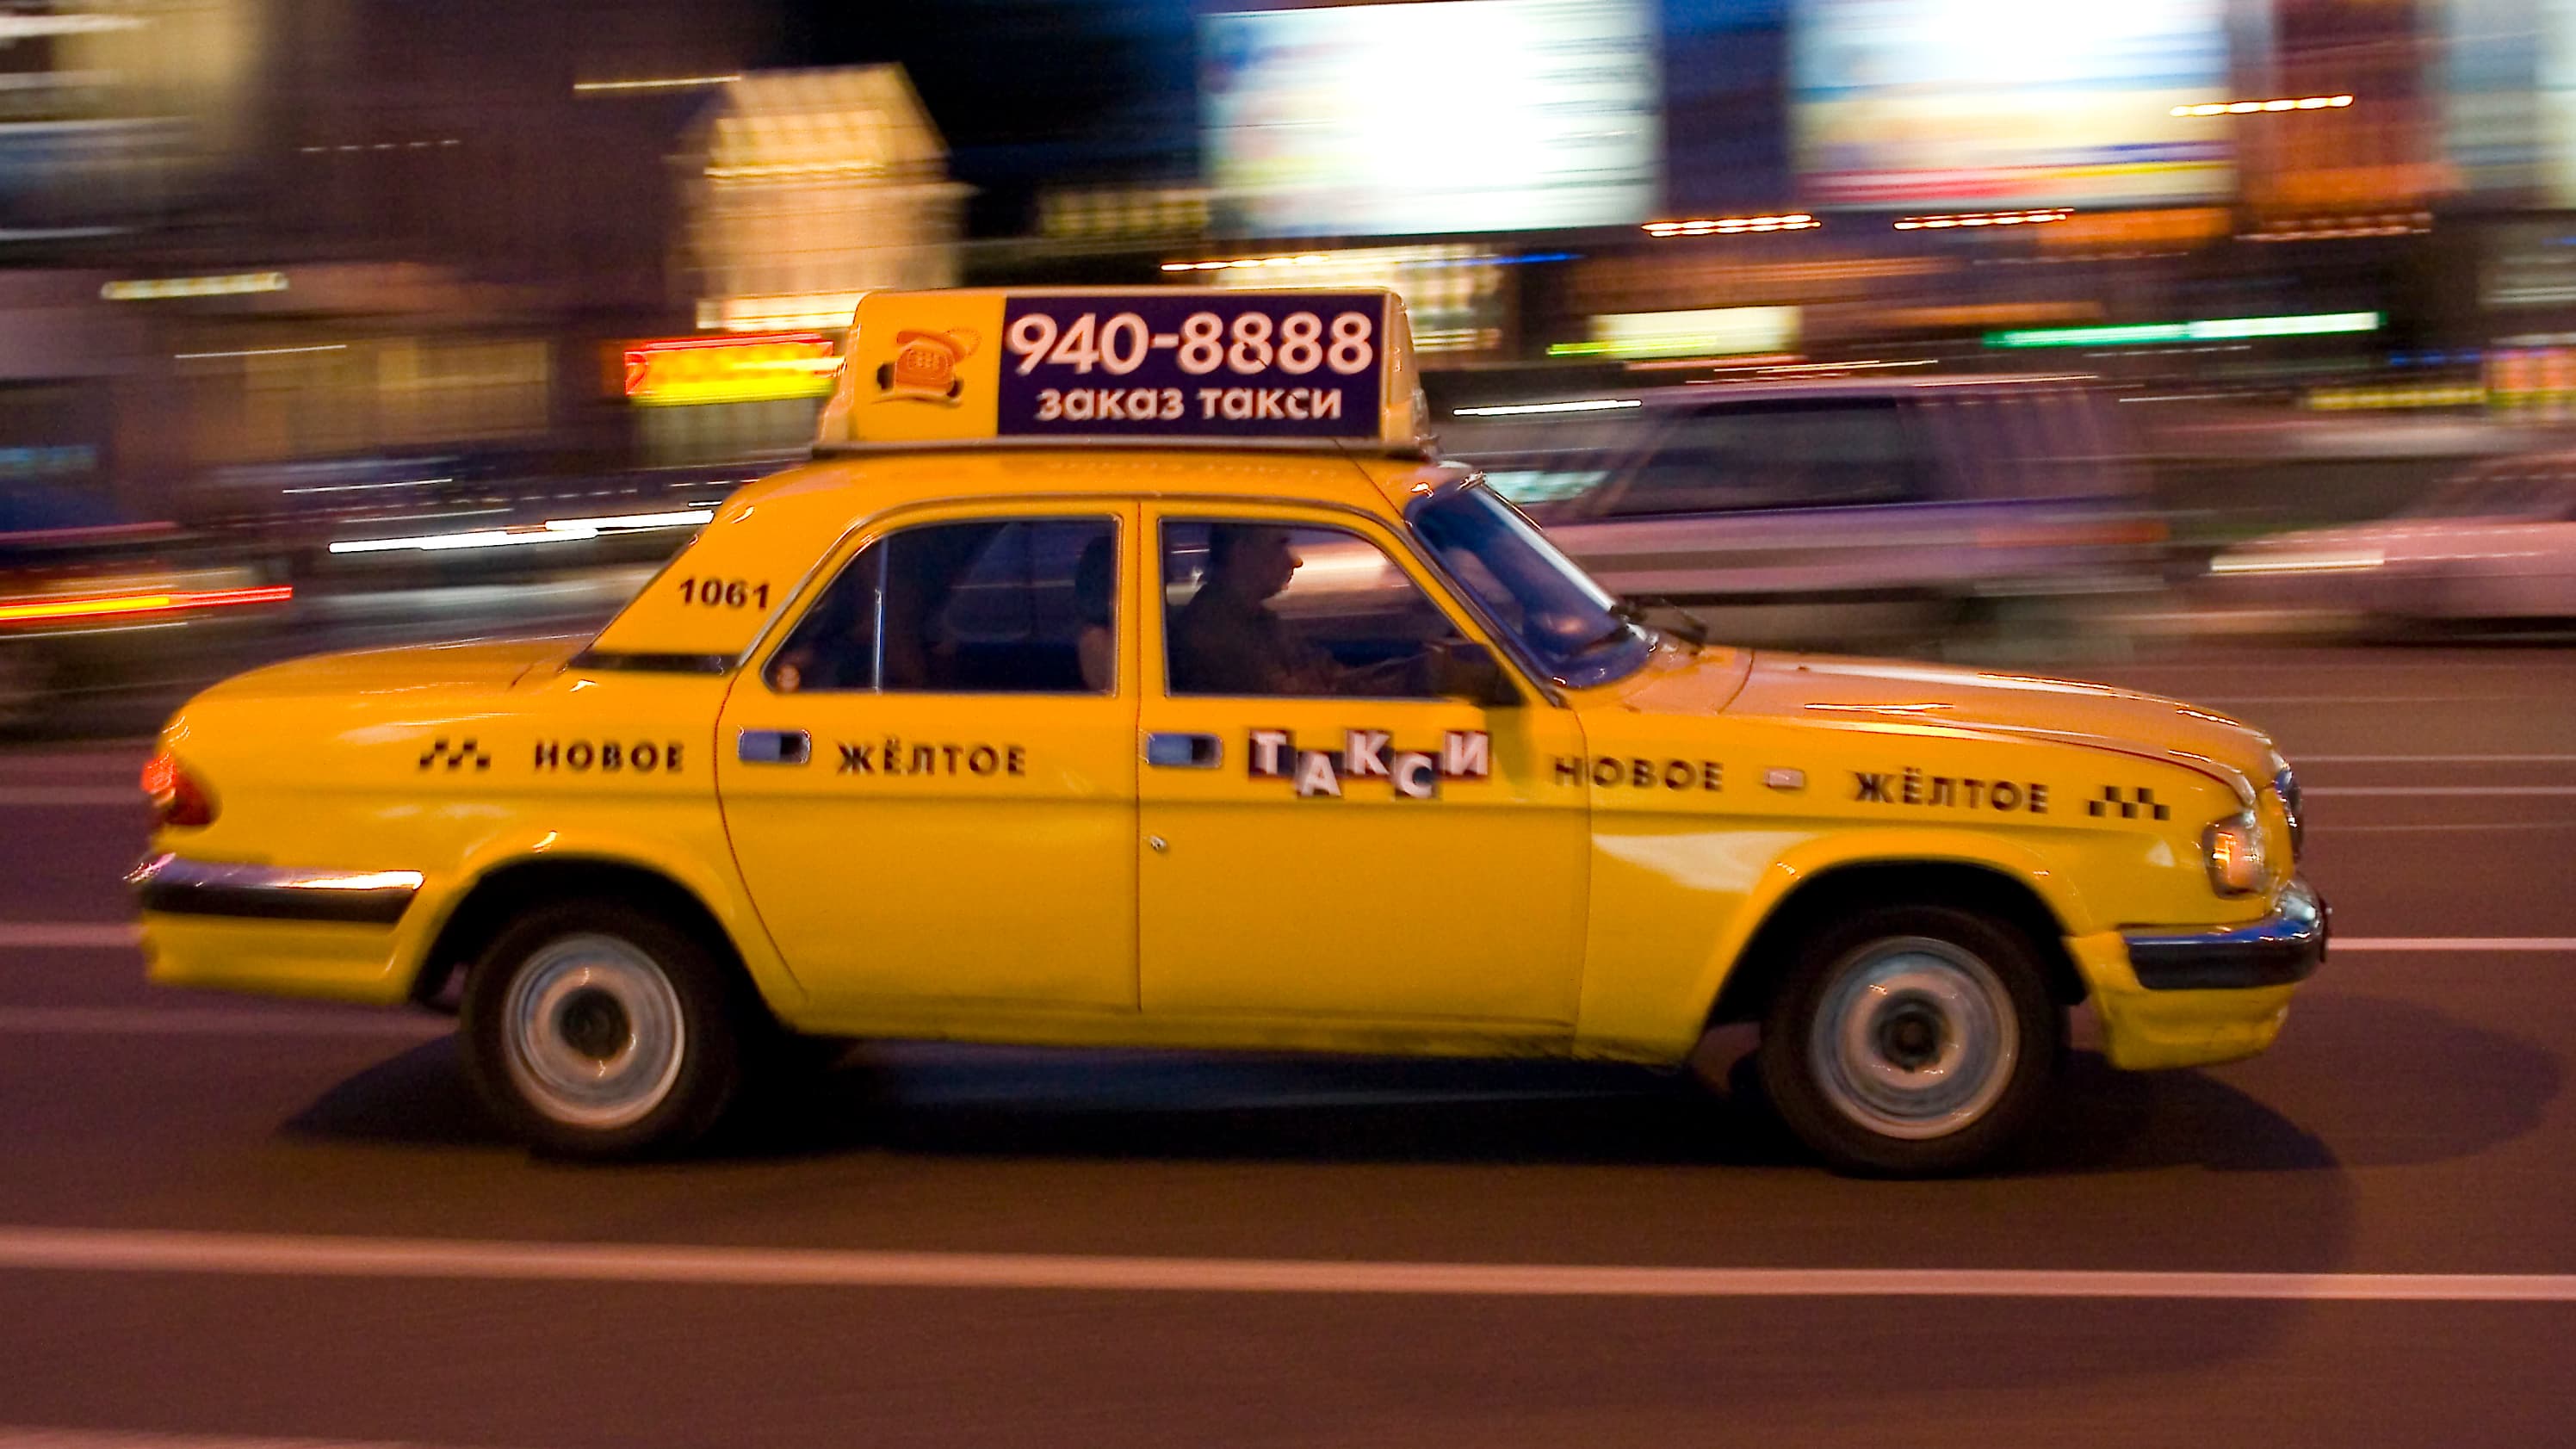 Закажи таксист. Волга 3110 новое желтое такси. ГАЗ 3110 такси Москва. Новое желтое такси Москва ГАЗ 3110. ГАЗ 31105 такси.